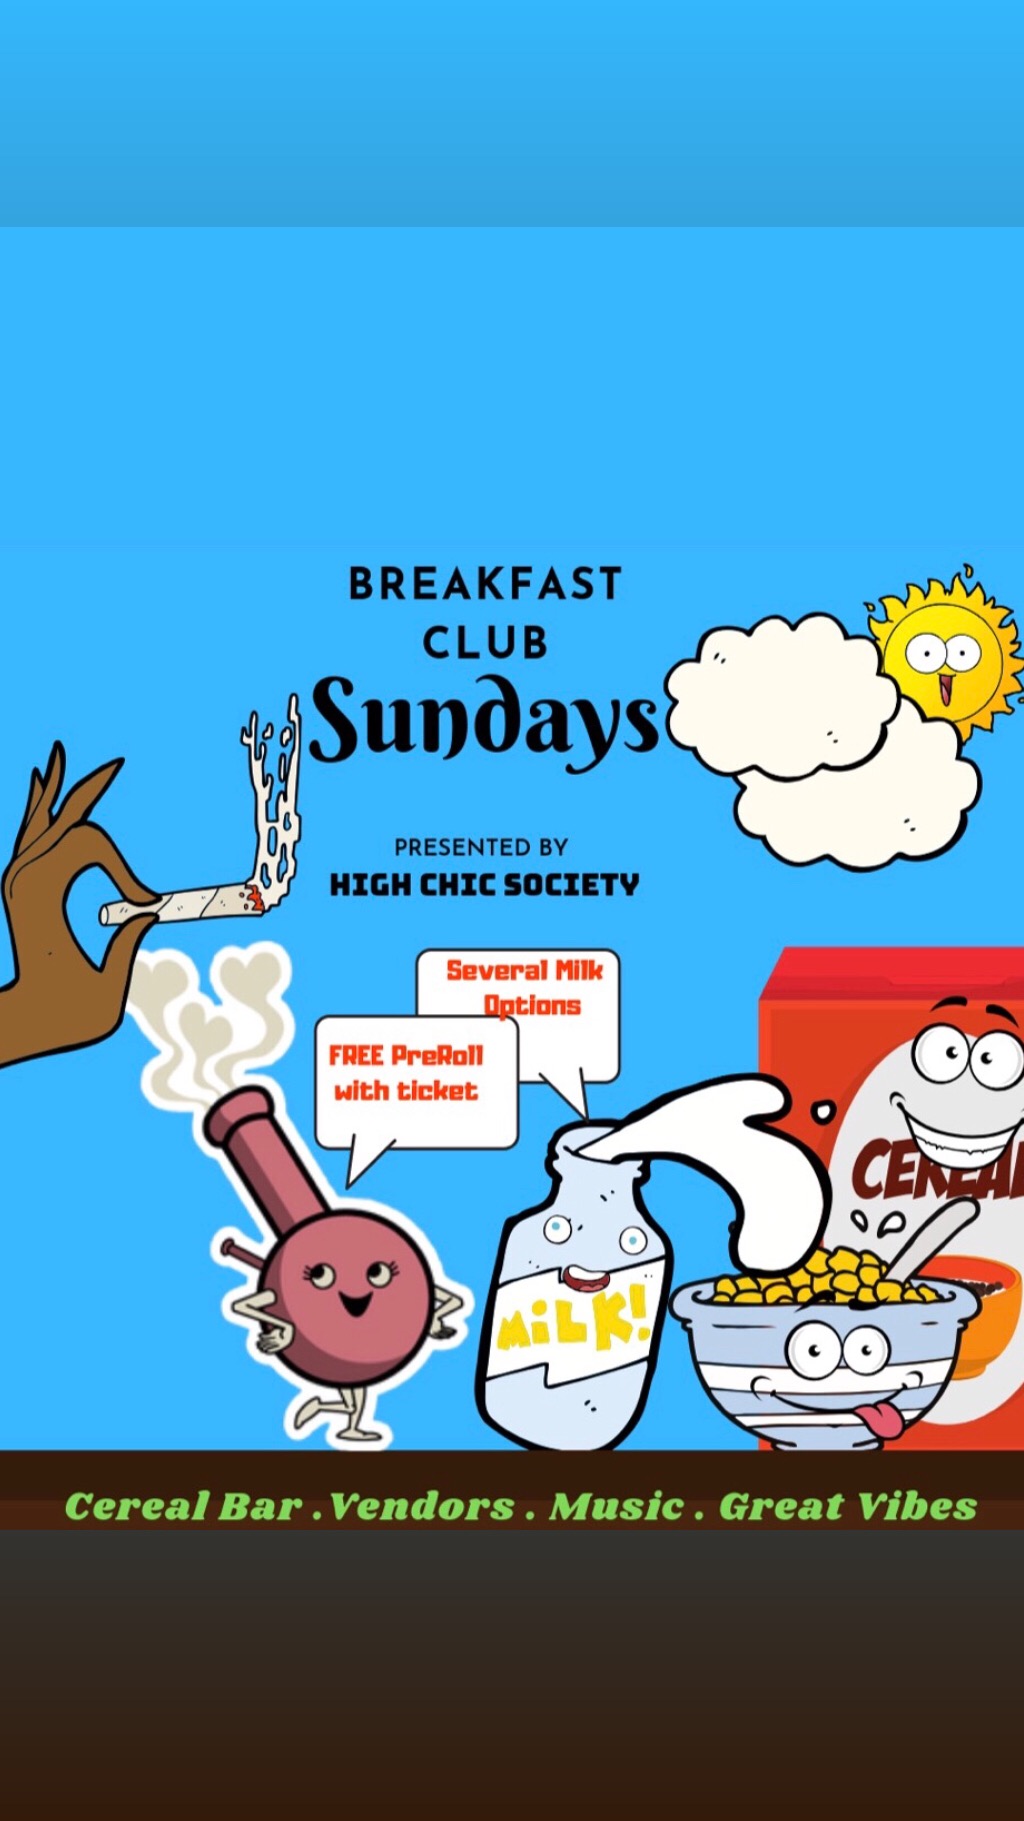 Breakfast Club Sundays 7/14